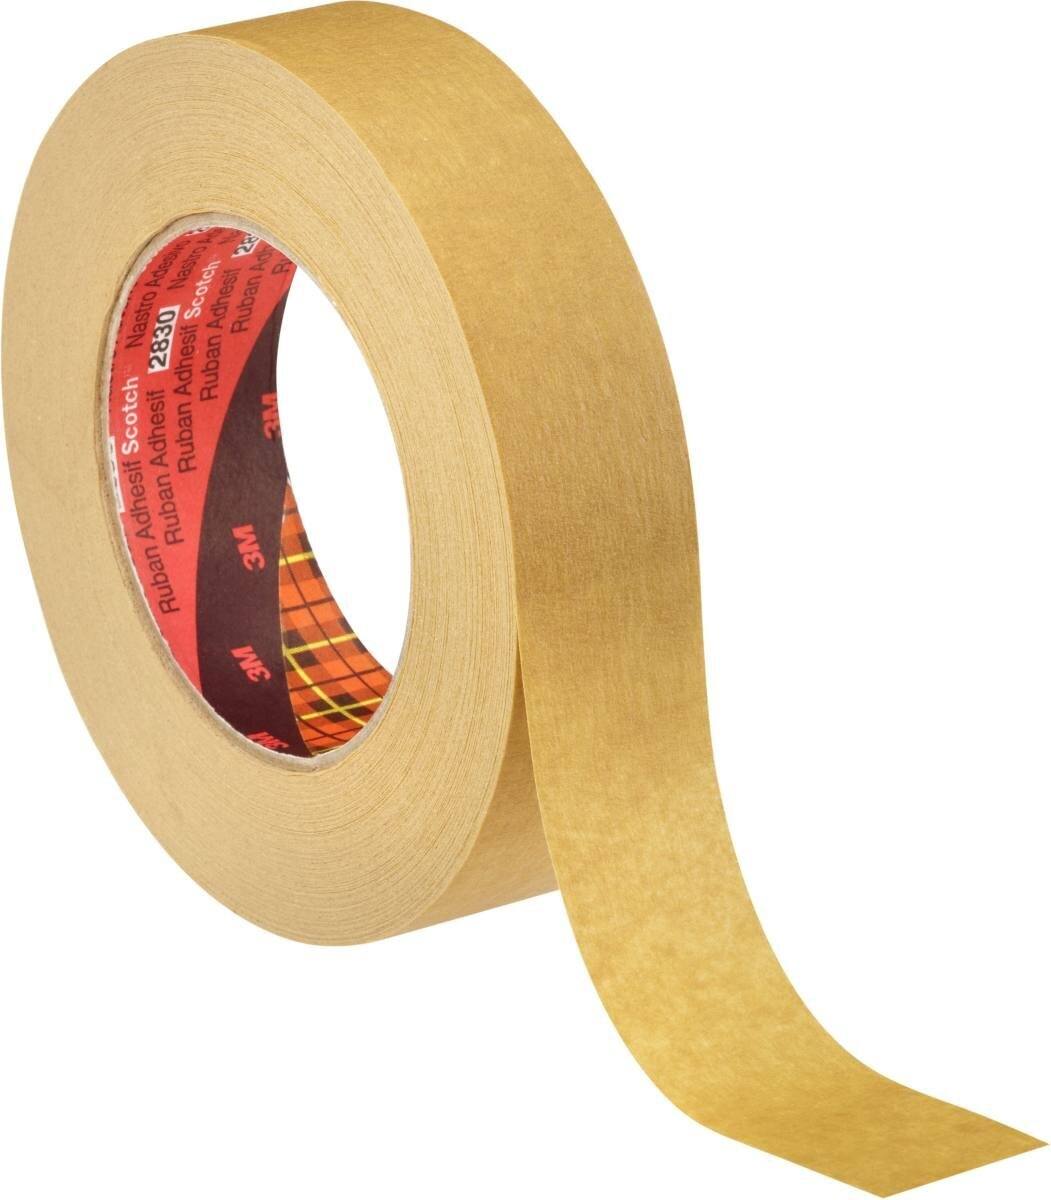 3M Scotch Papierklebeband 2830, Braun, 72 mm x 50 m, 0,175 mm